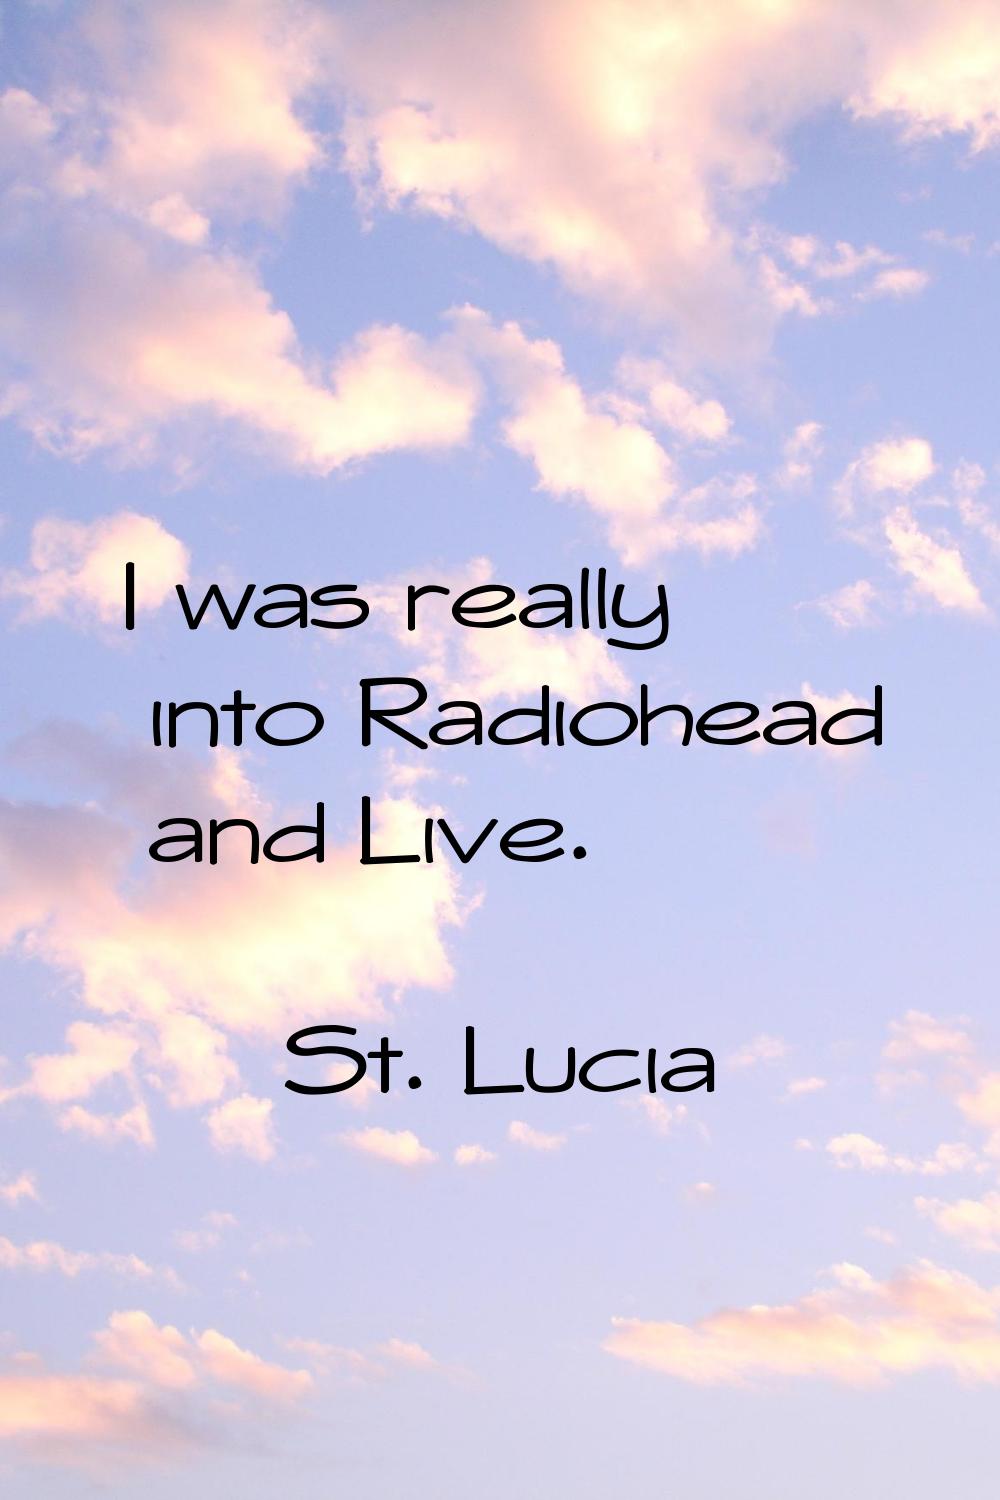 I was really into Radiohead and Live.